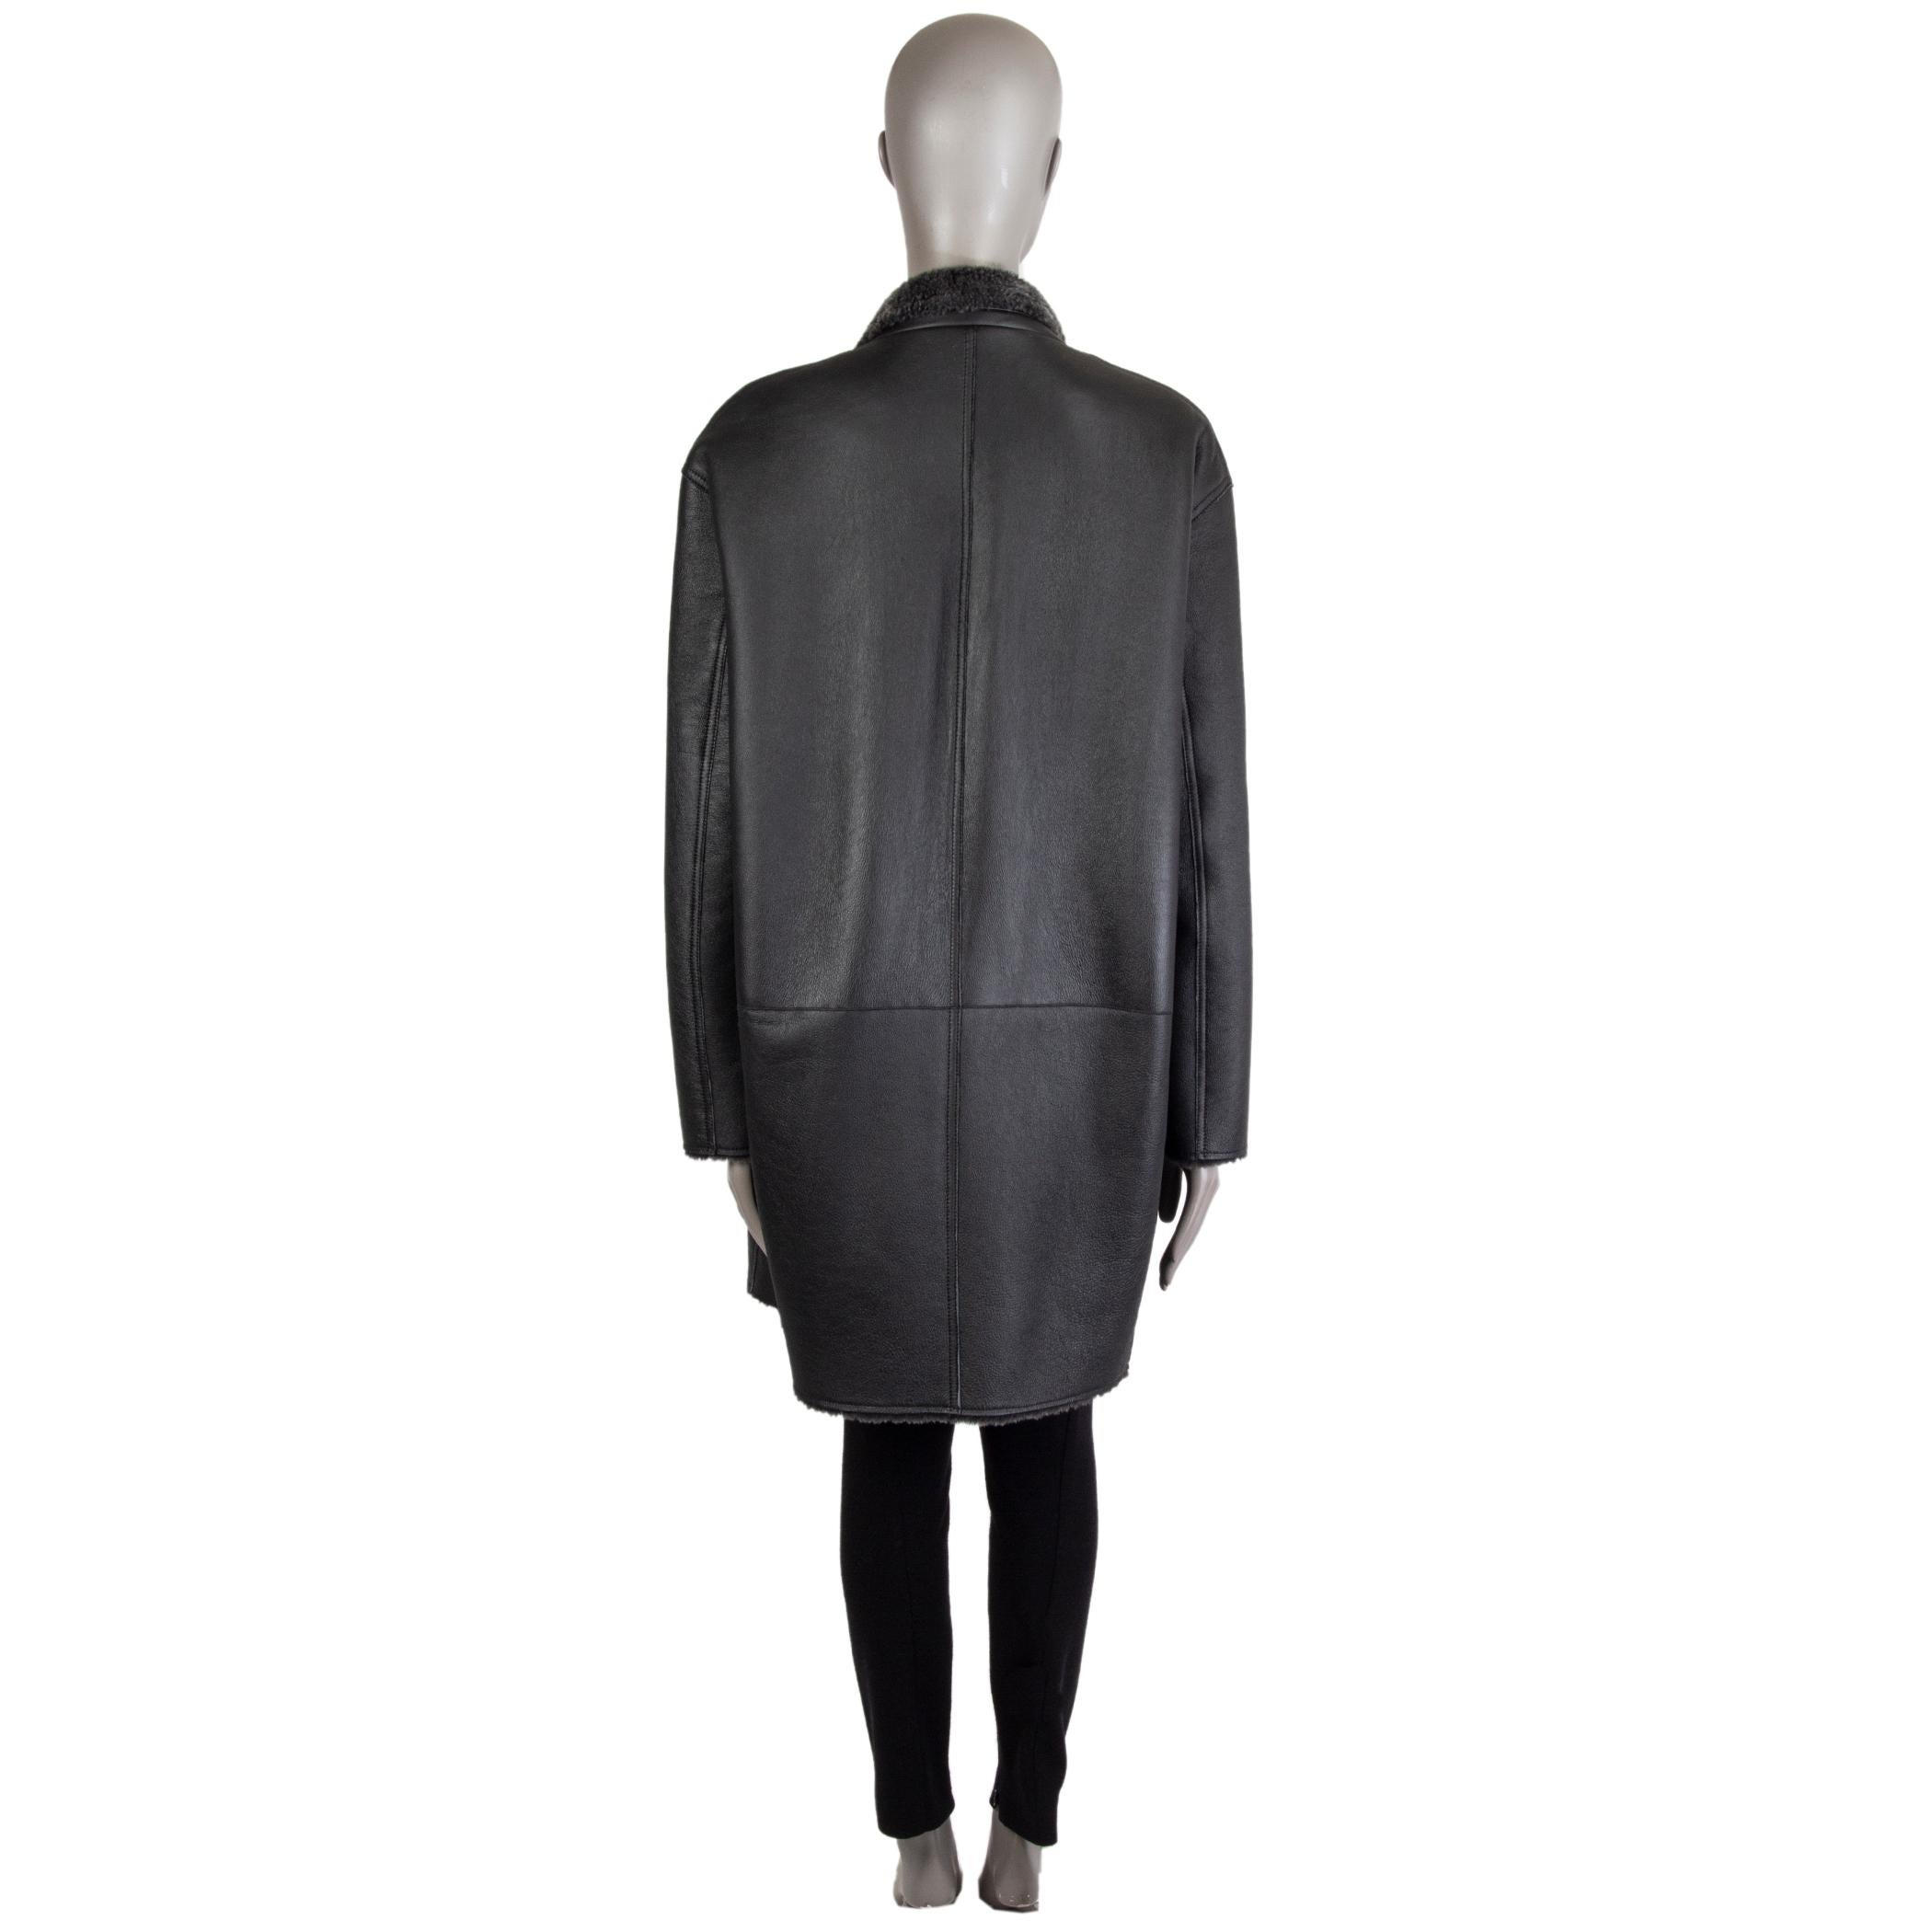 Black CELINE grey REVERSIBLE LEATHER & SHEARLING OPEN Coat Jacket 42 L